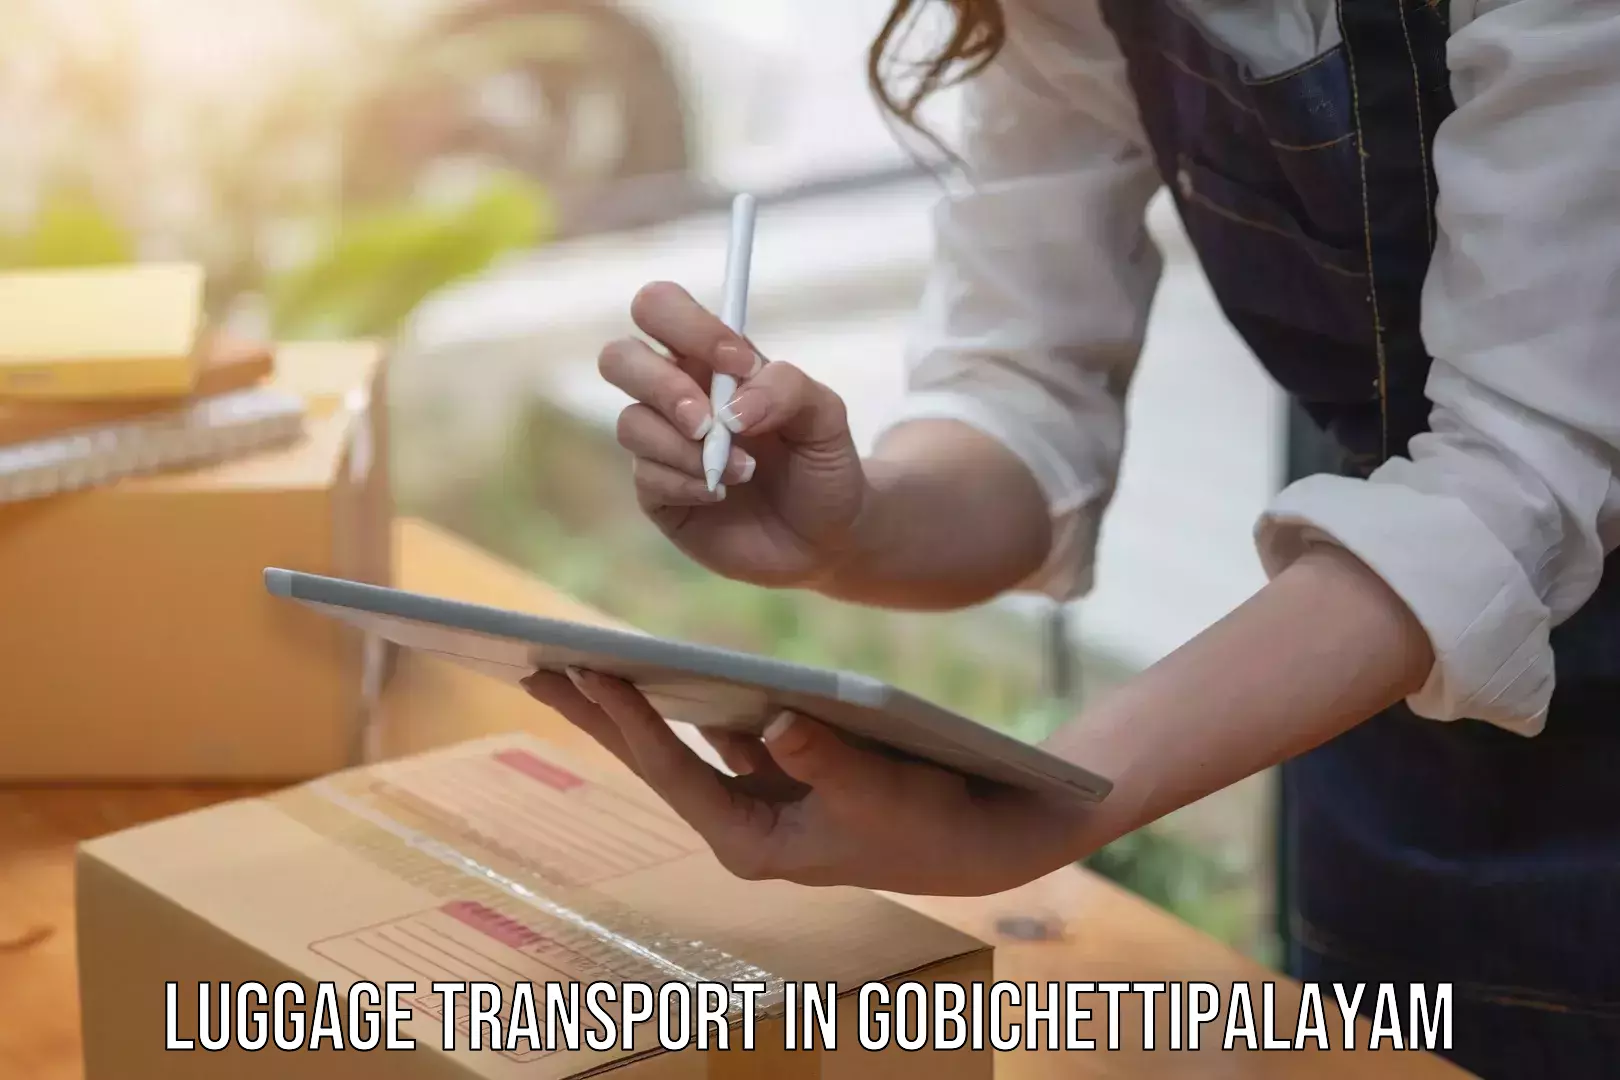 Luggage shipment tracking in Gobichettipalayam